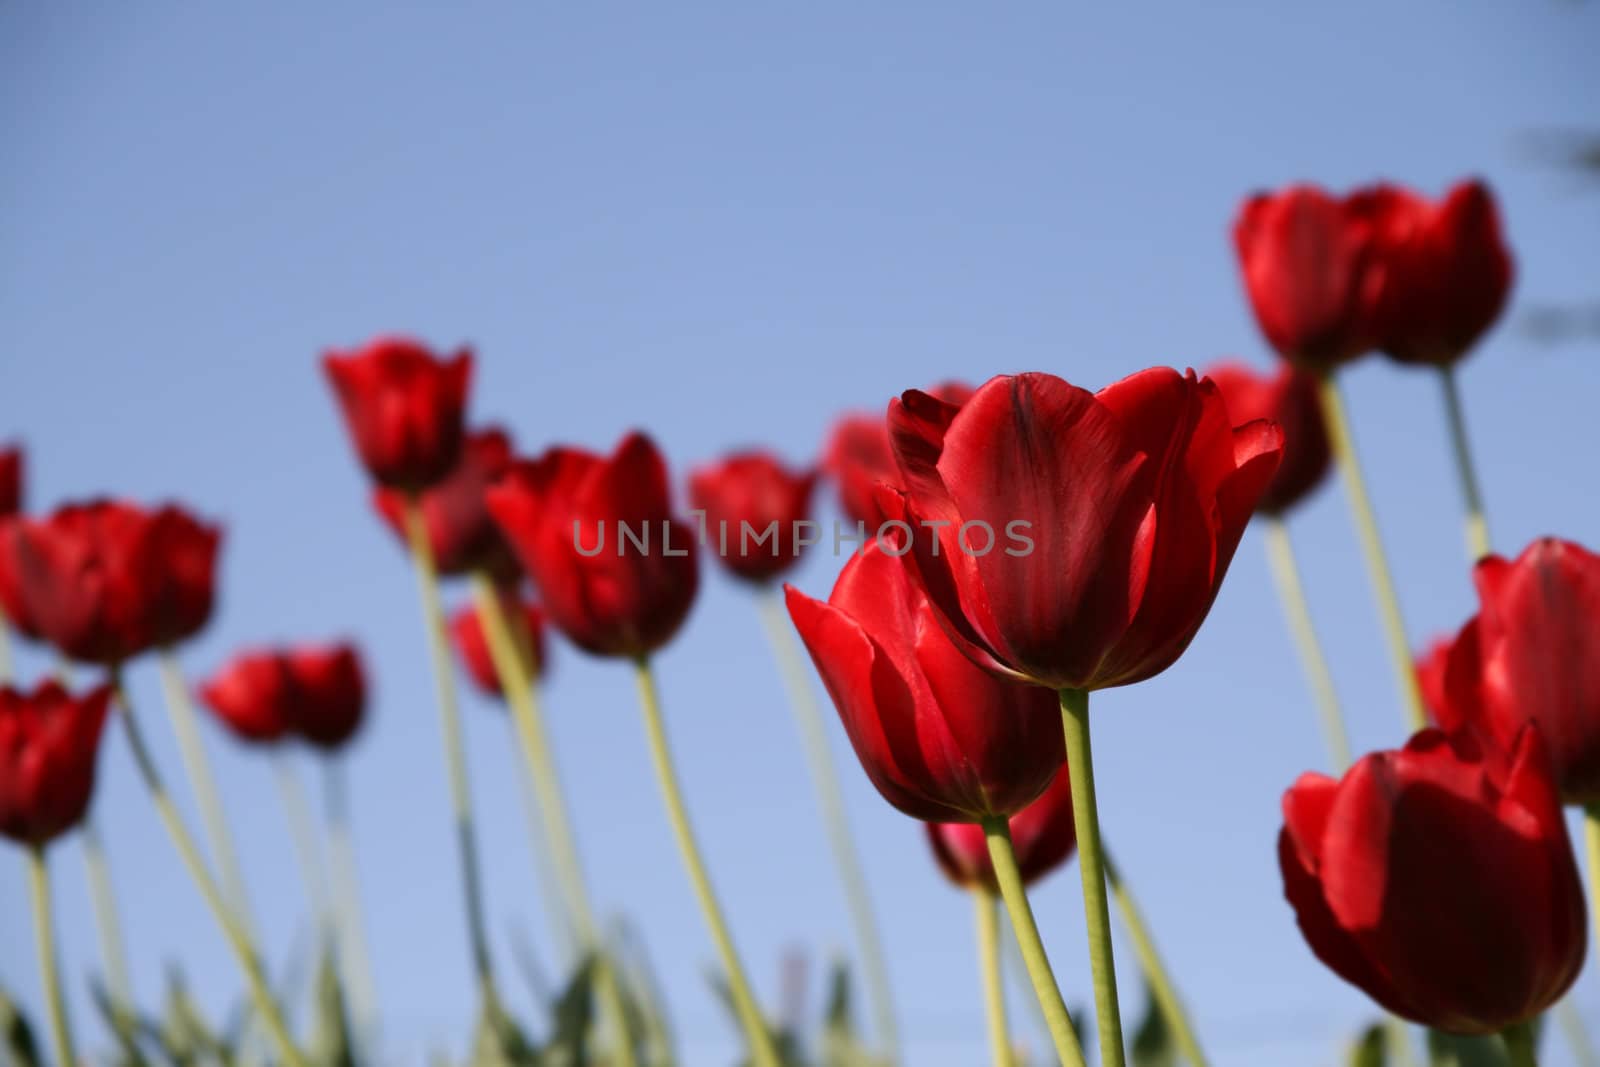 many red tulips in a field - blue sky